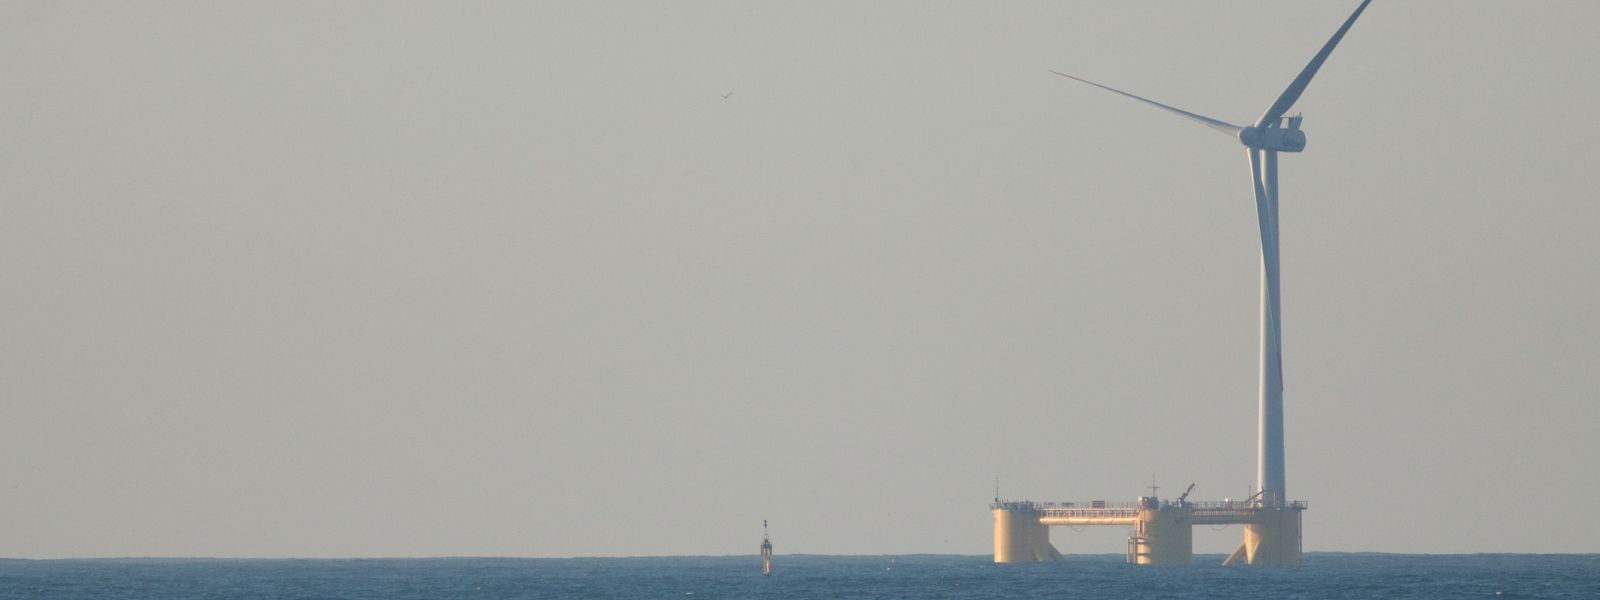 A floating wind turbine